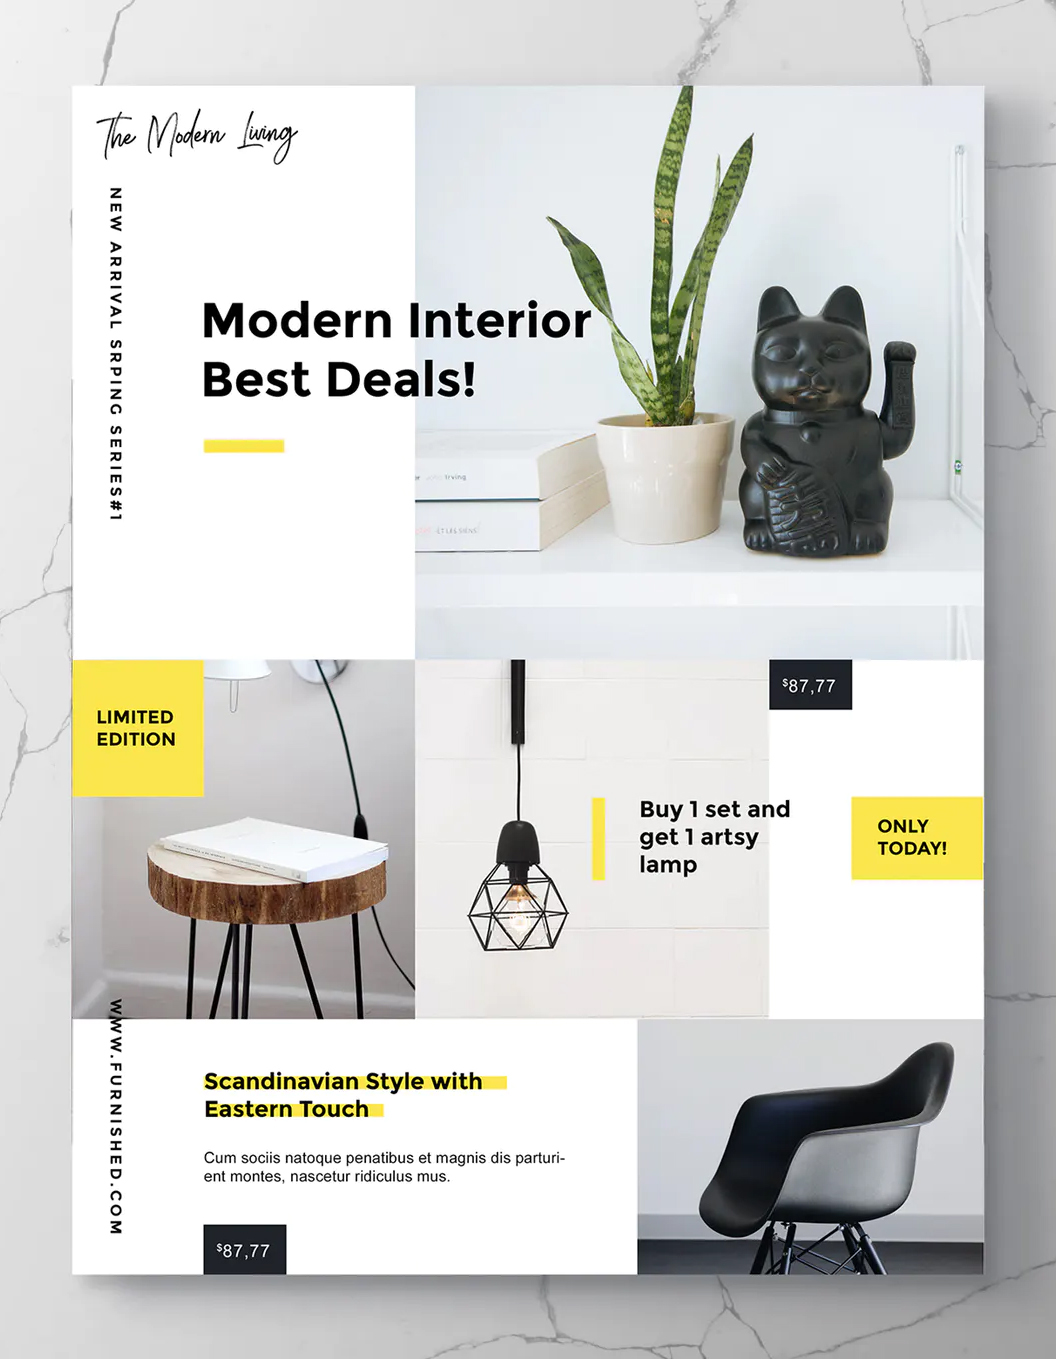 Modern furniture and interior flyer design